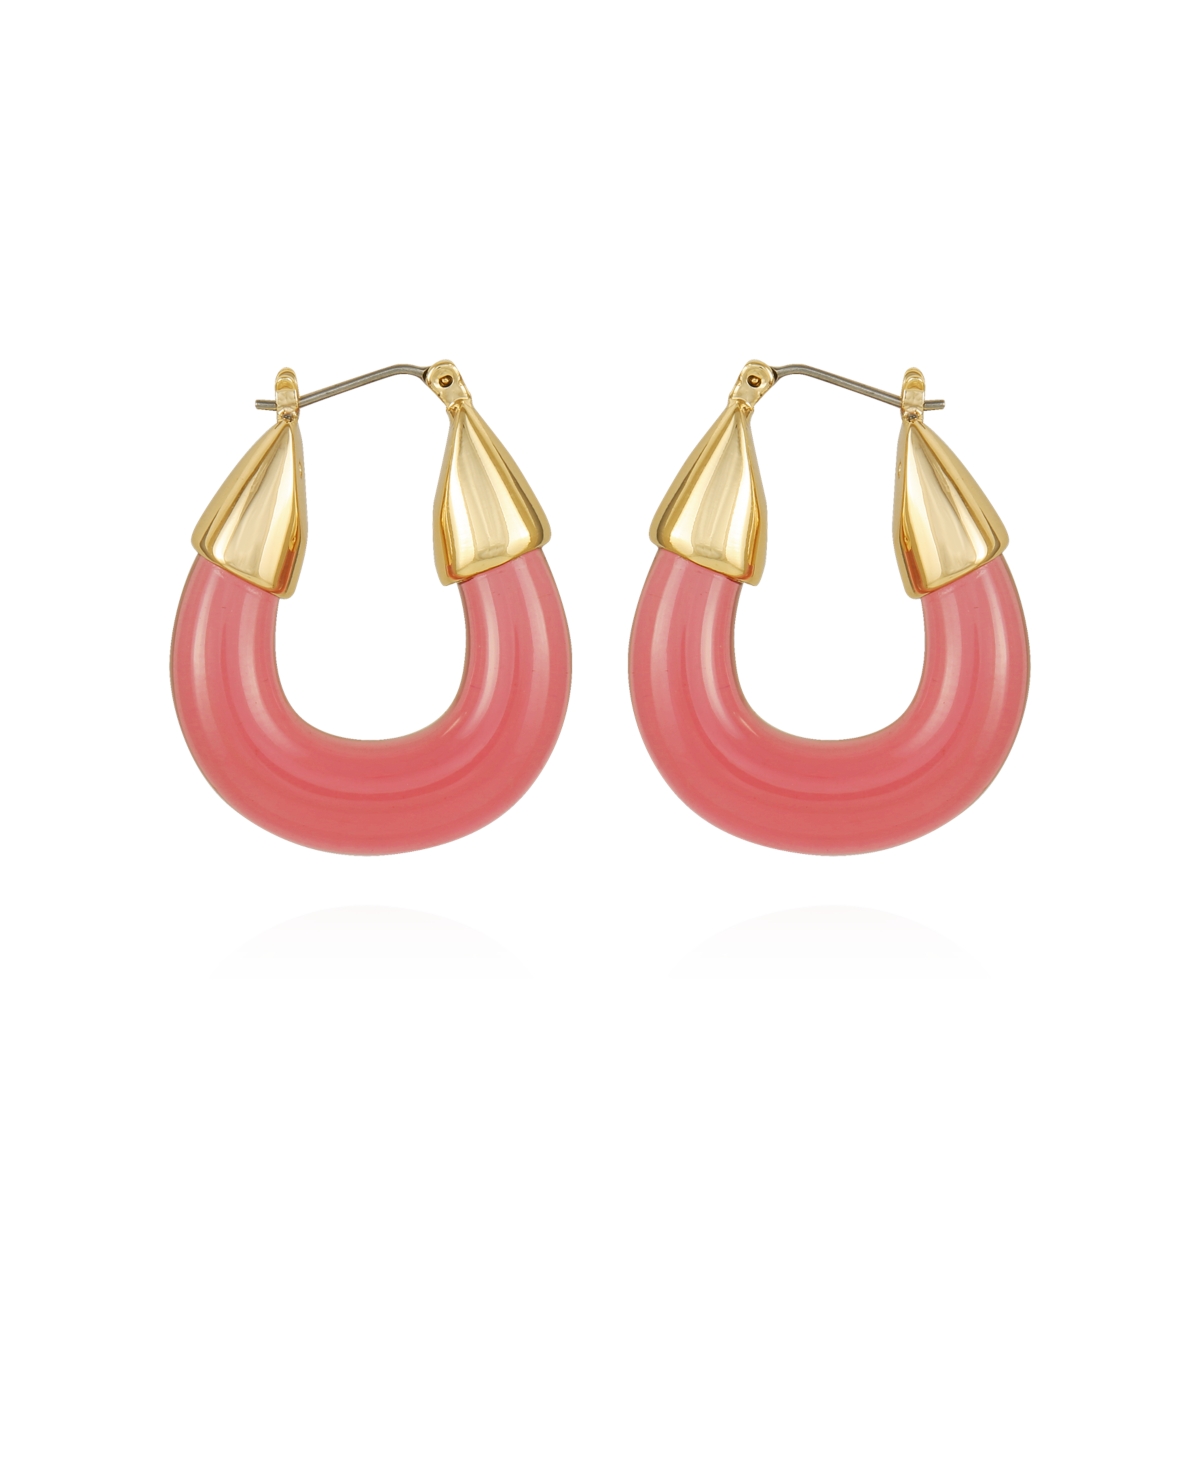 Rock Candy Hoop Earrings - Gold-Tone, Pink